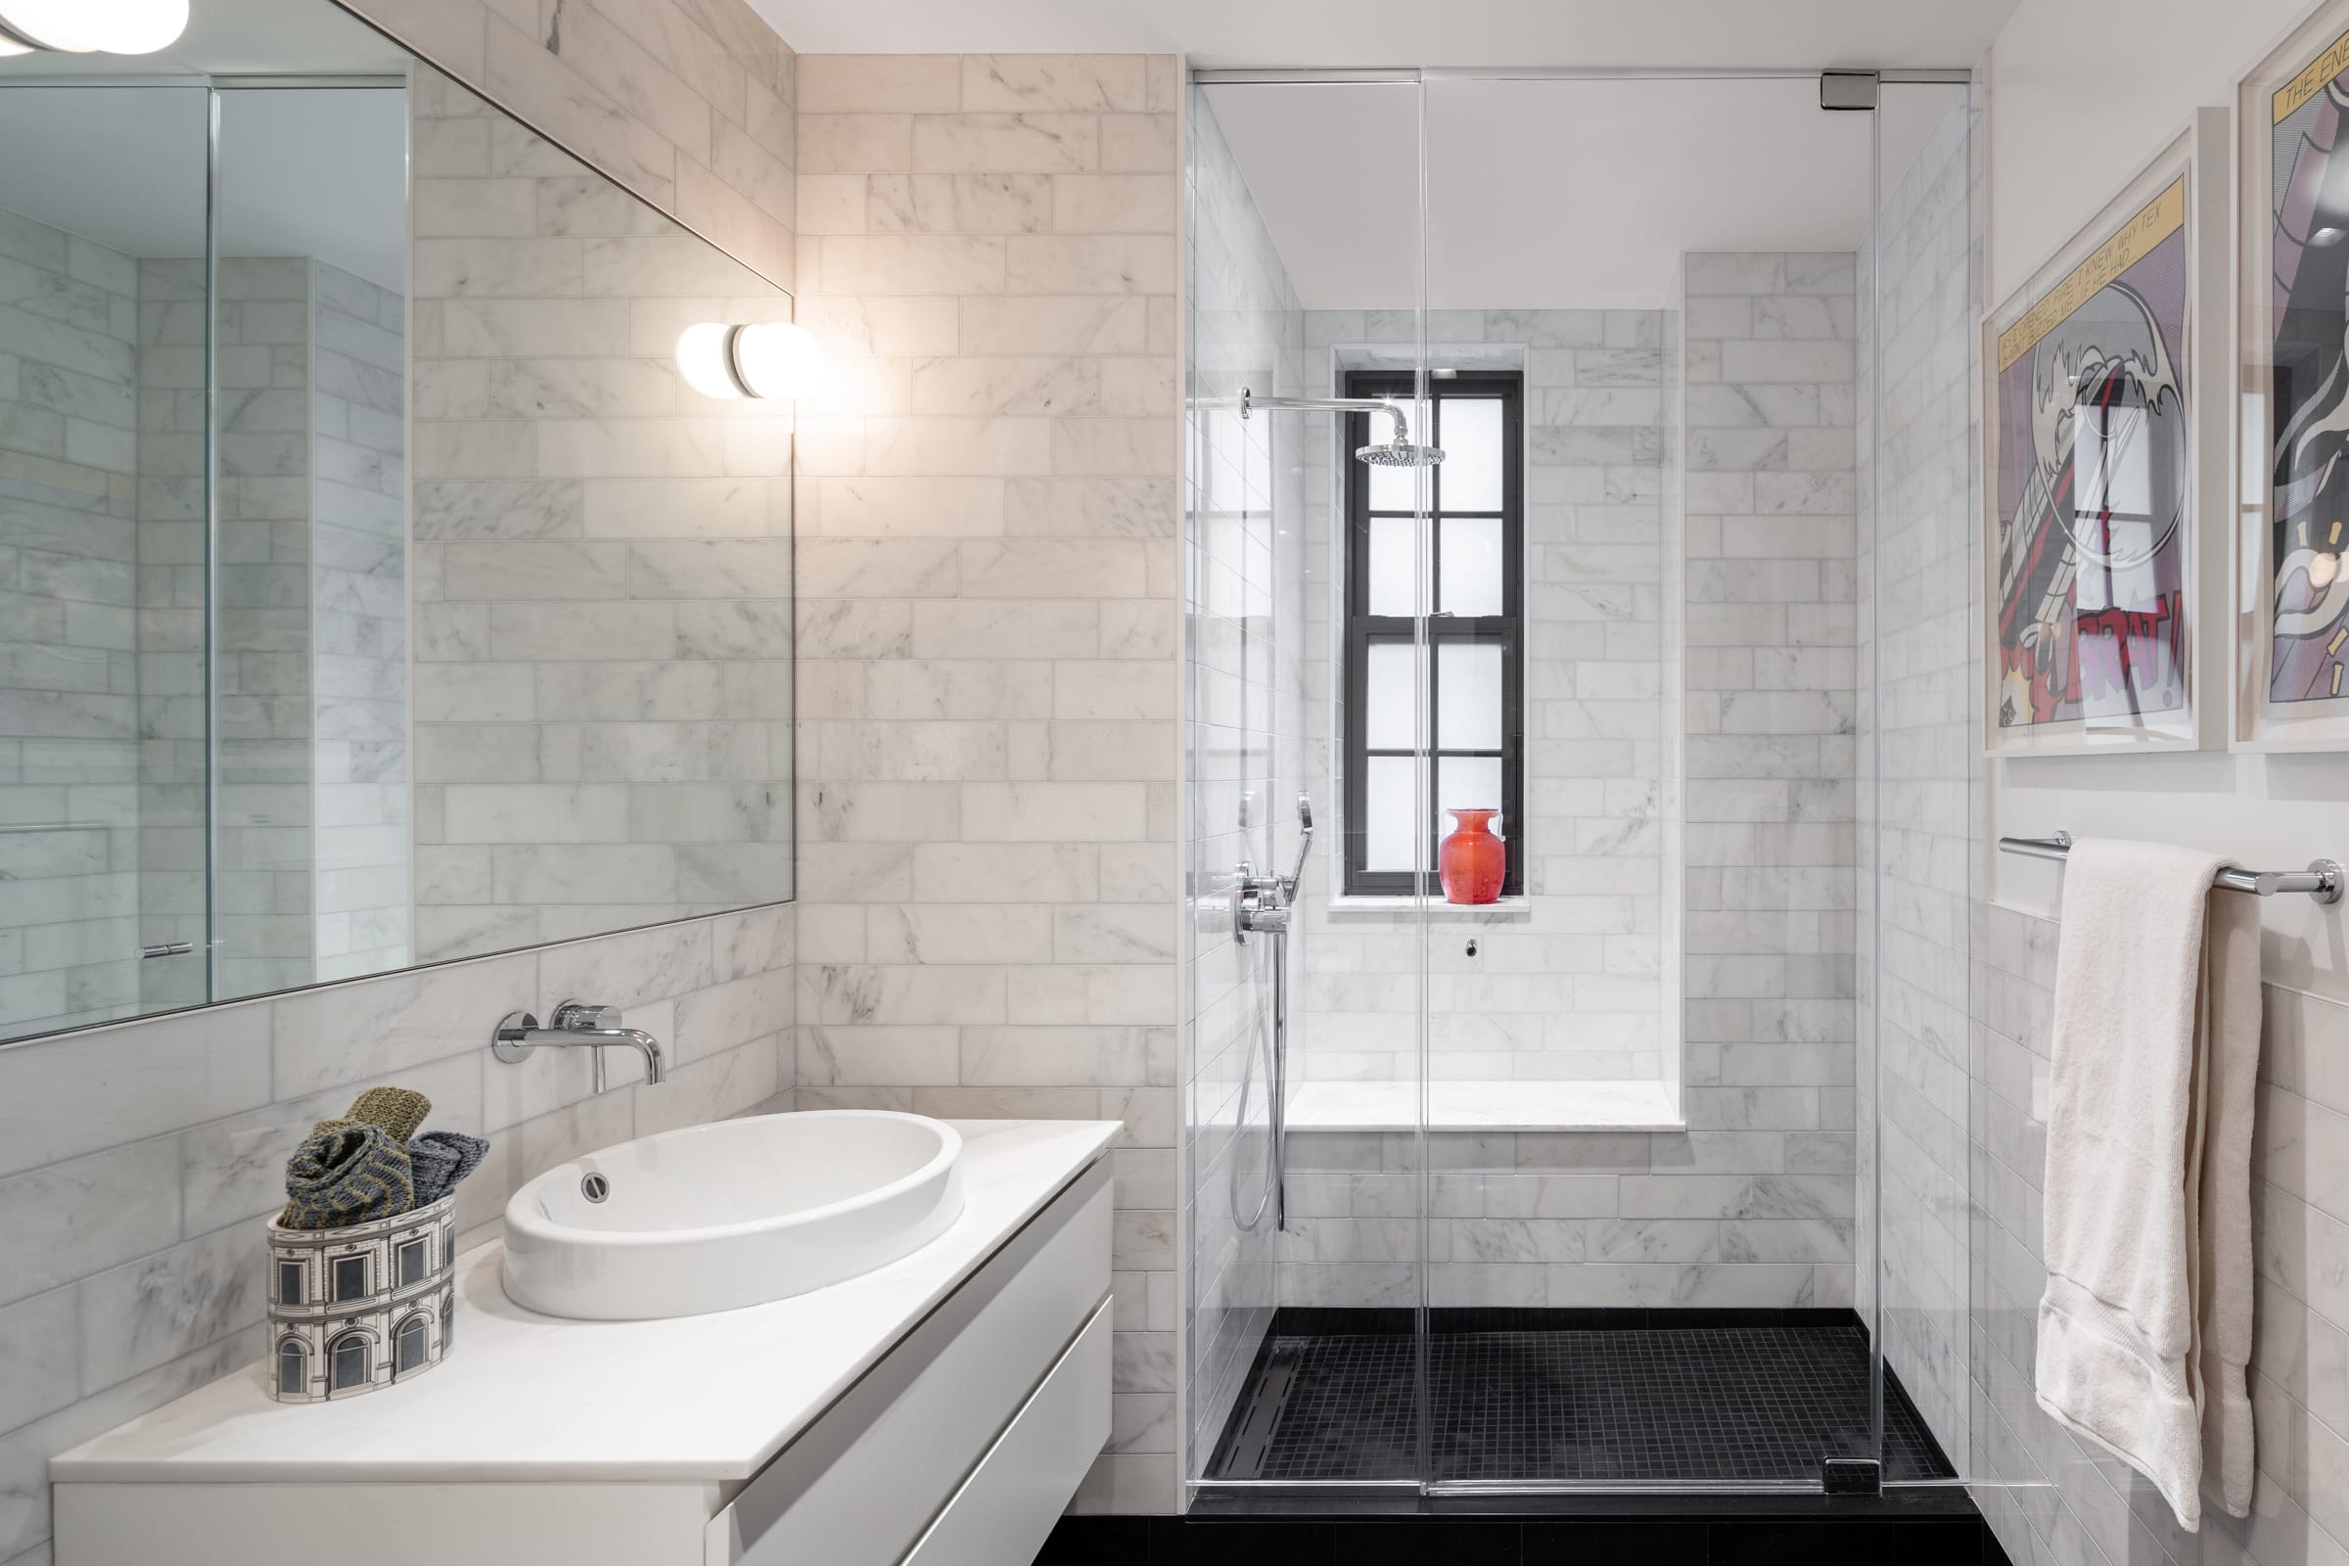 Bathroom with custom shower enclosure and black floor tiles